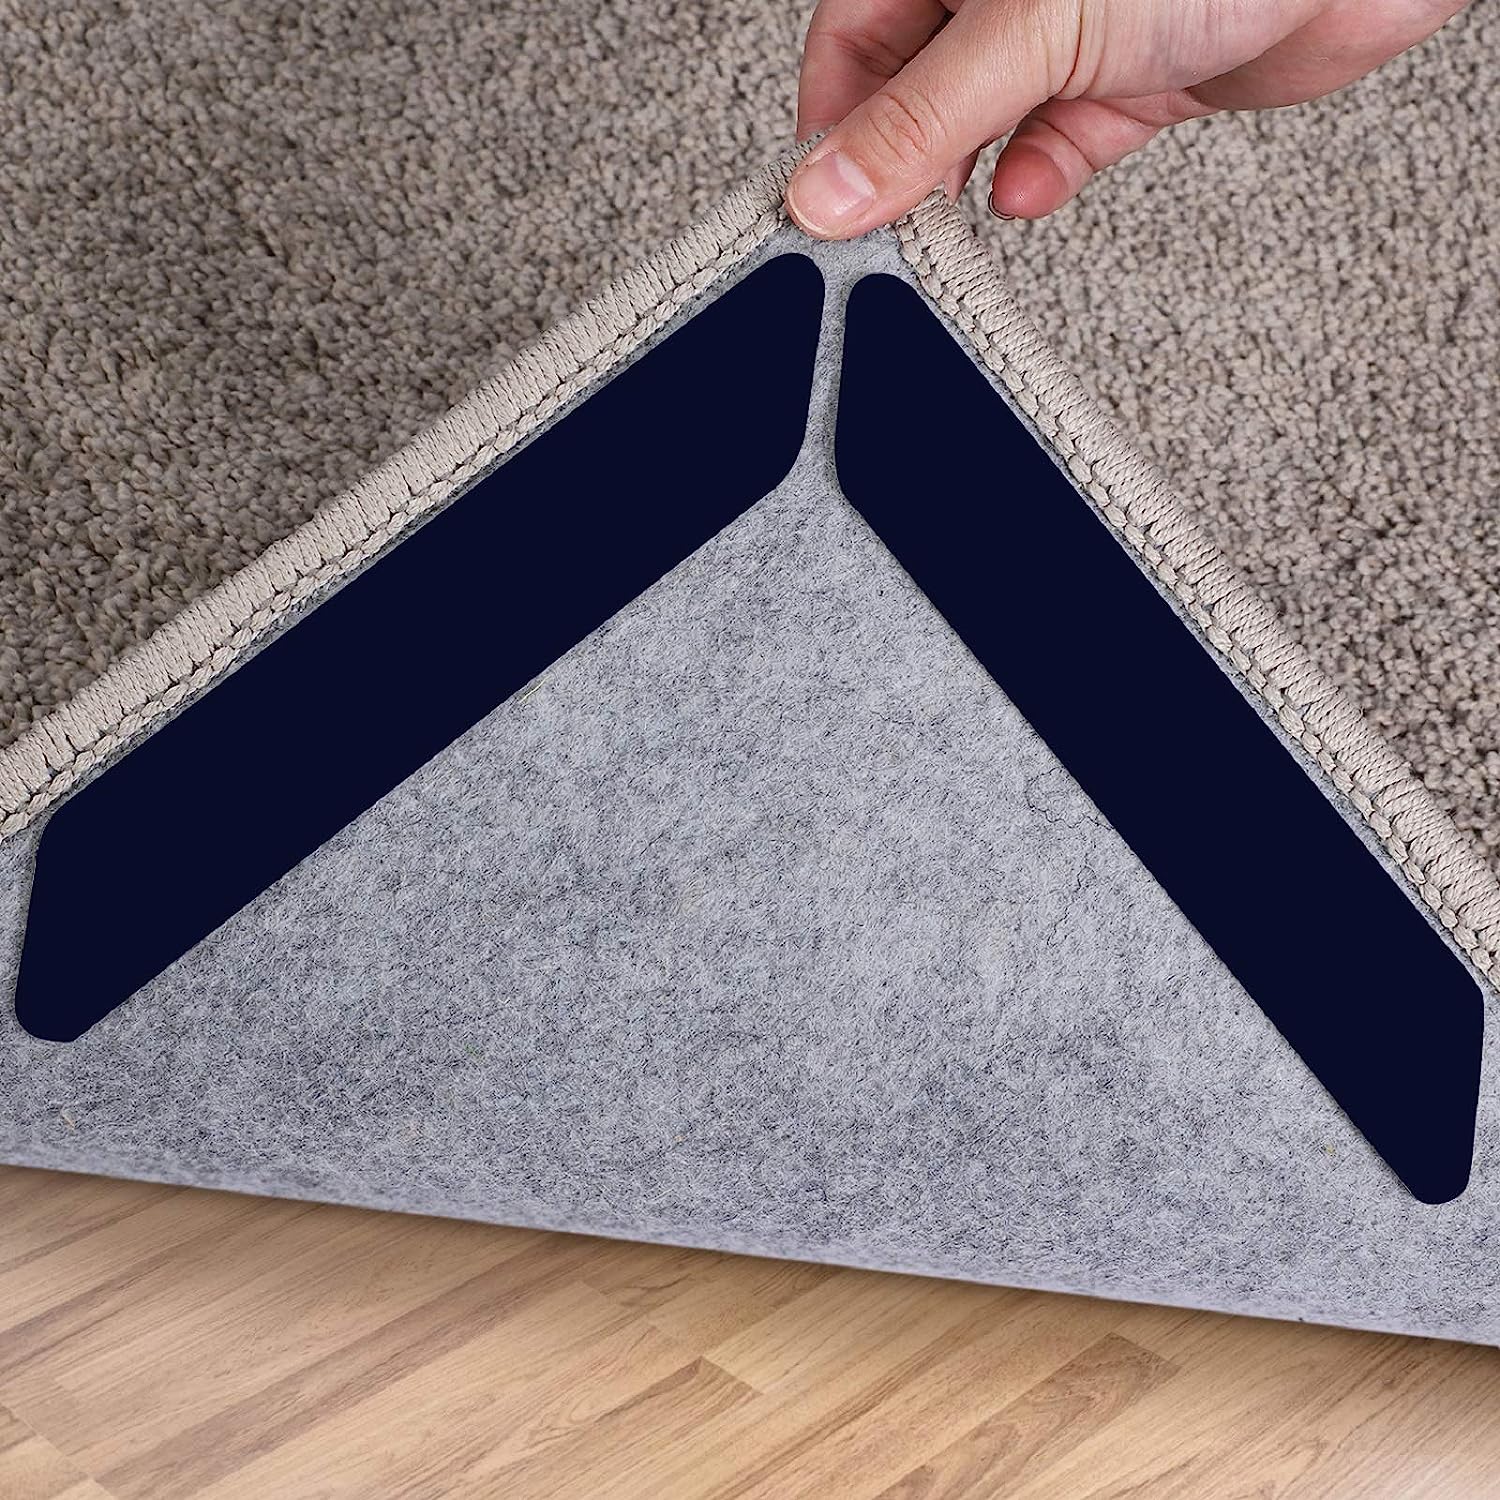 Carpet Mat Grippers Non Slip, Anti Slip Grip Carpets